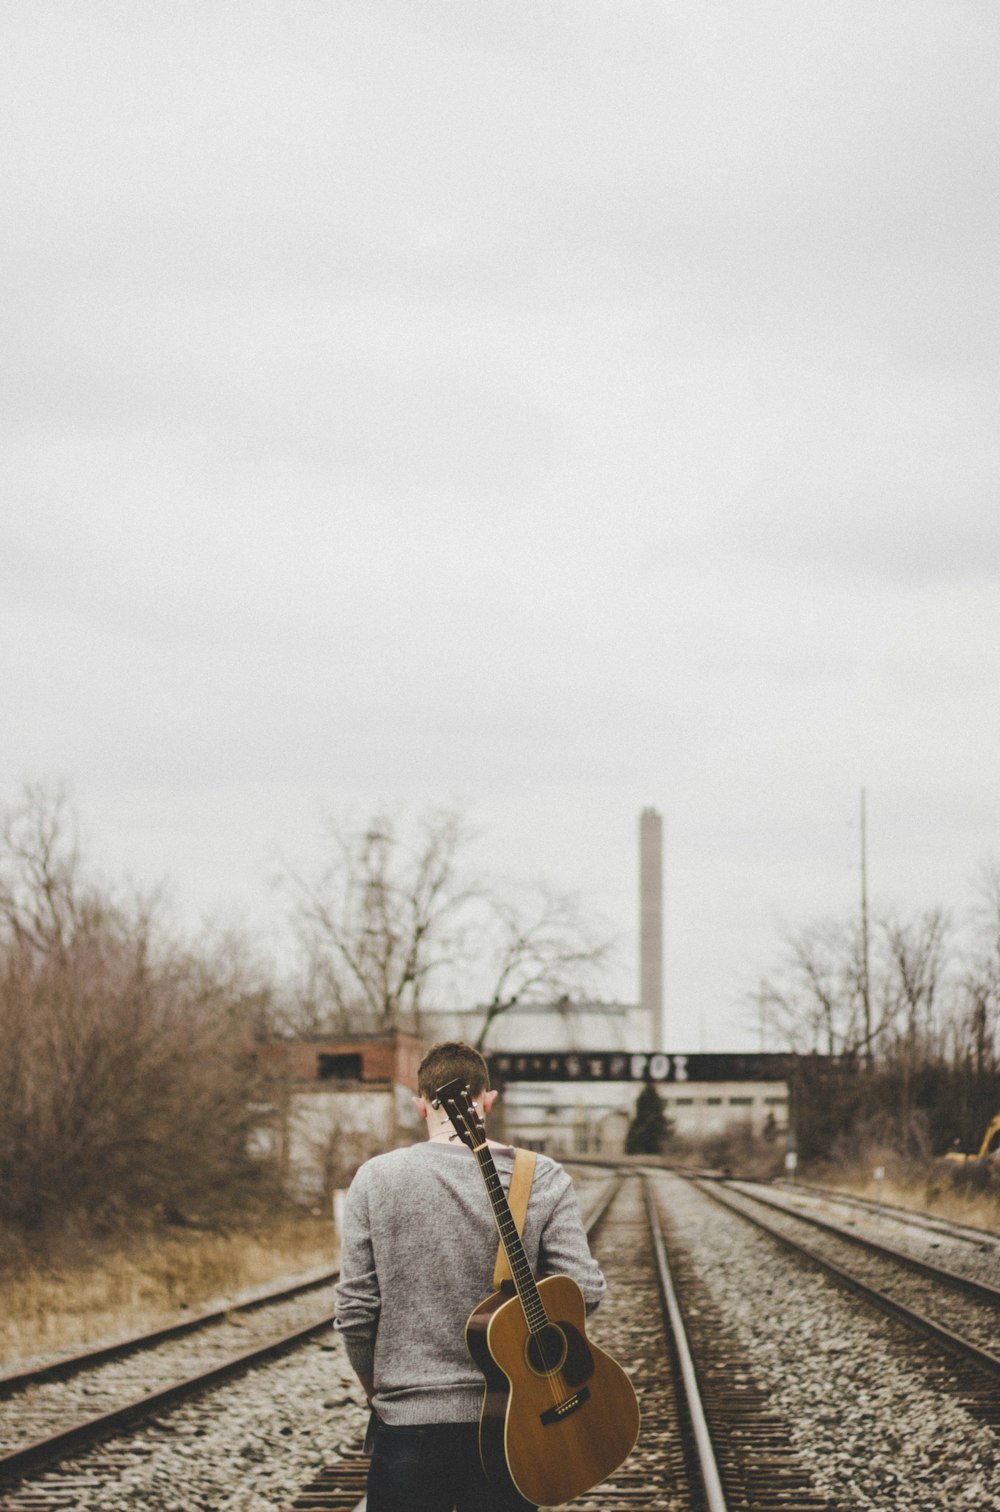 man carrying guitar walking on train rails